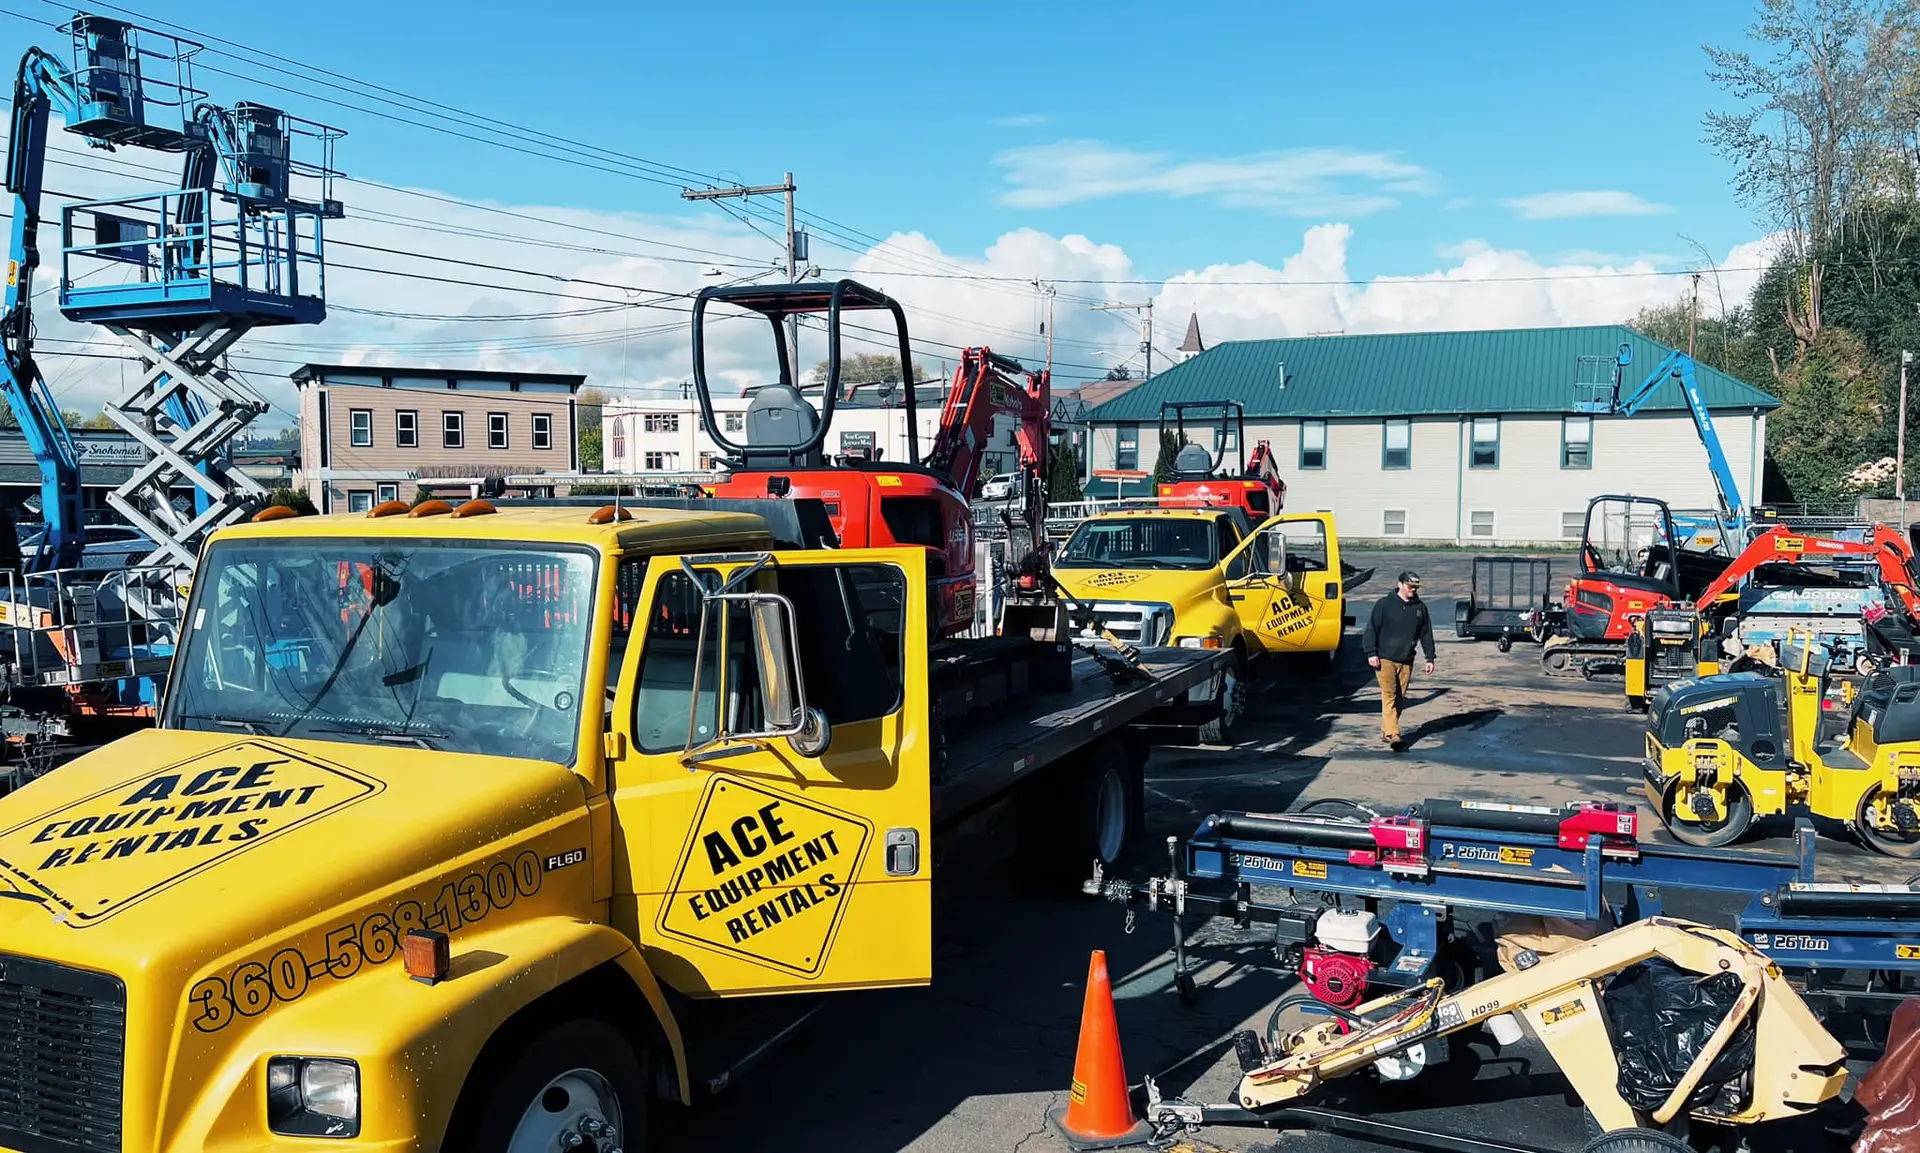 ace equipment compact excavator on trailer in rental equipment yard